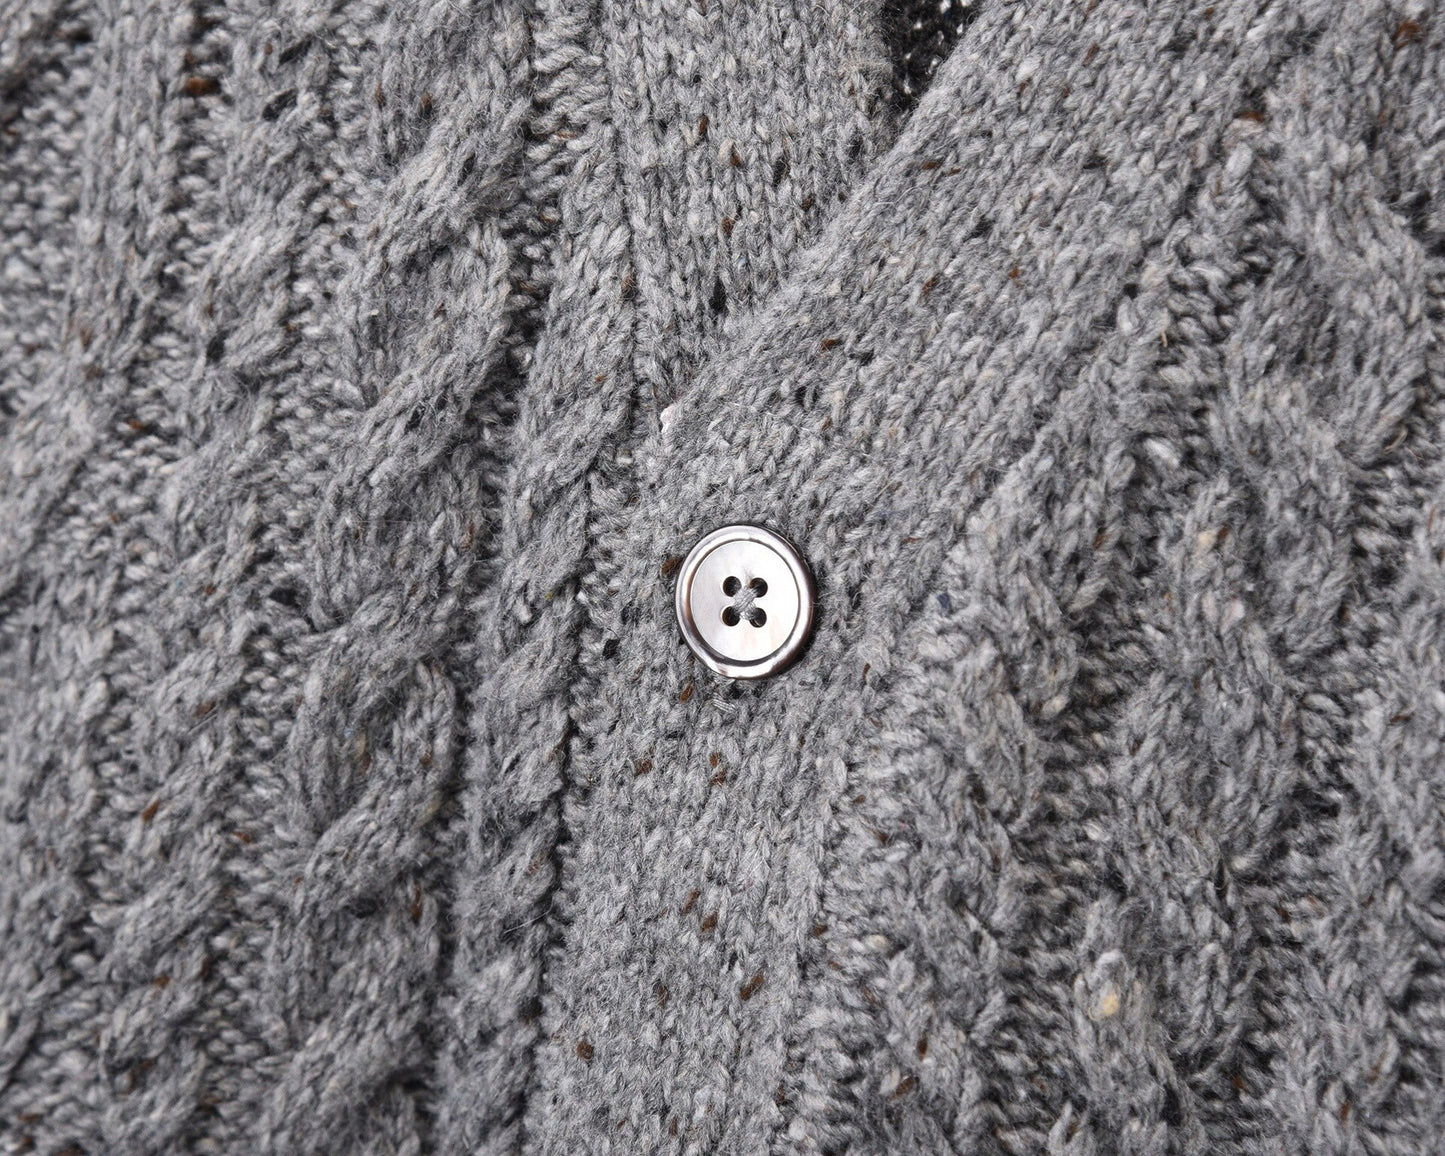 Men Cardigan Wool Casual Sweater